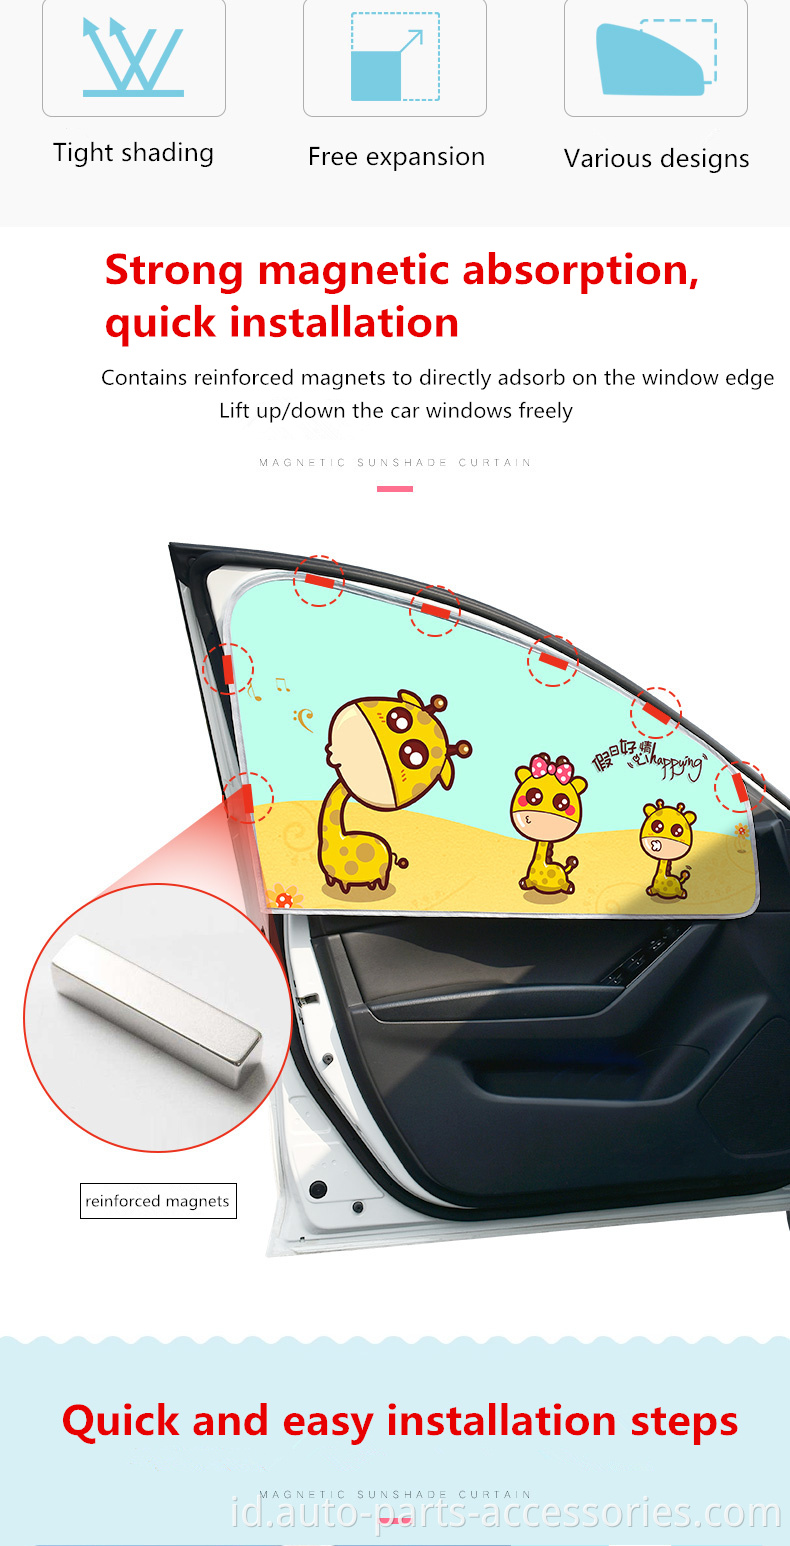 2 Paket Sederhana Desain Kustom Magnet Sunscreen Microfiber Cloth Sun Shade Curtain Car Car